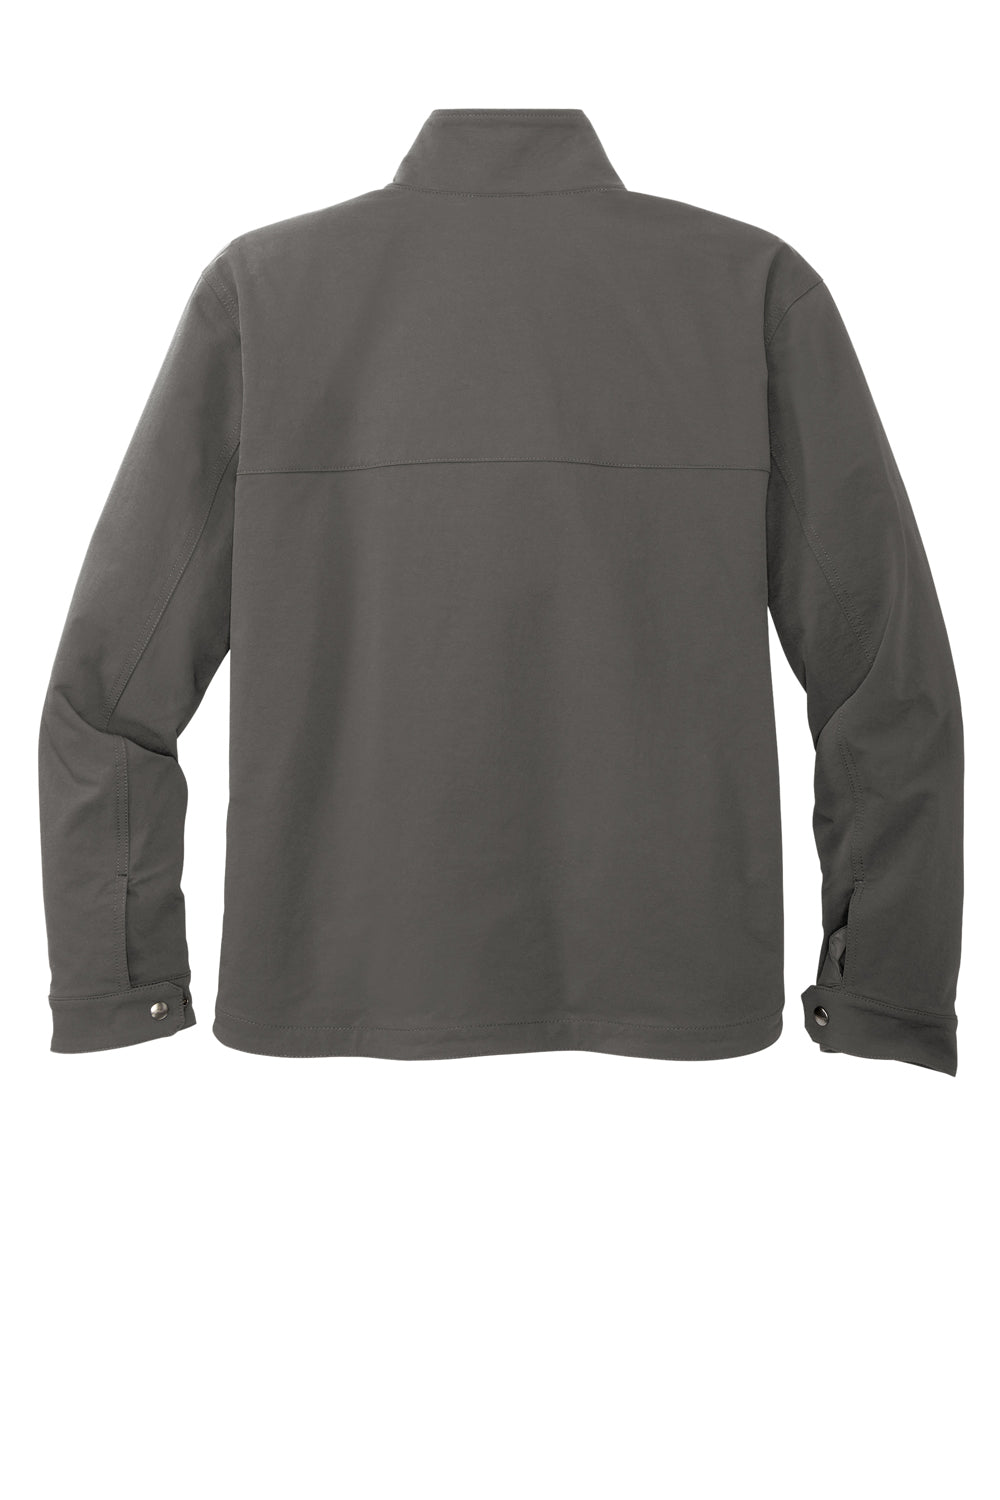 Carhartt CT105534 Mens Super Dux Wind & Water Resistant Full Zip Jacket Gravel Grey Flat Back